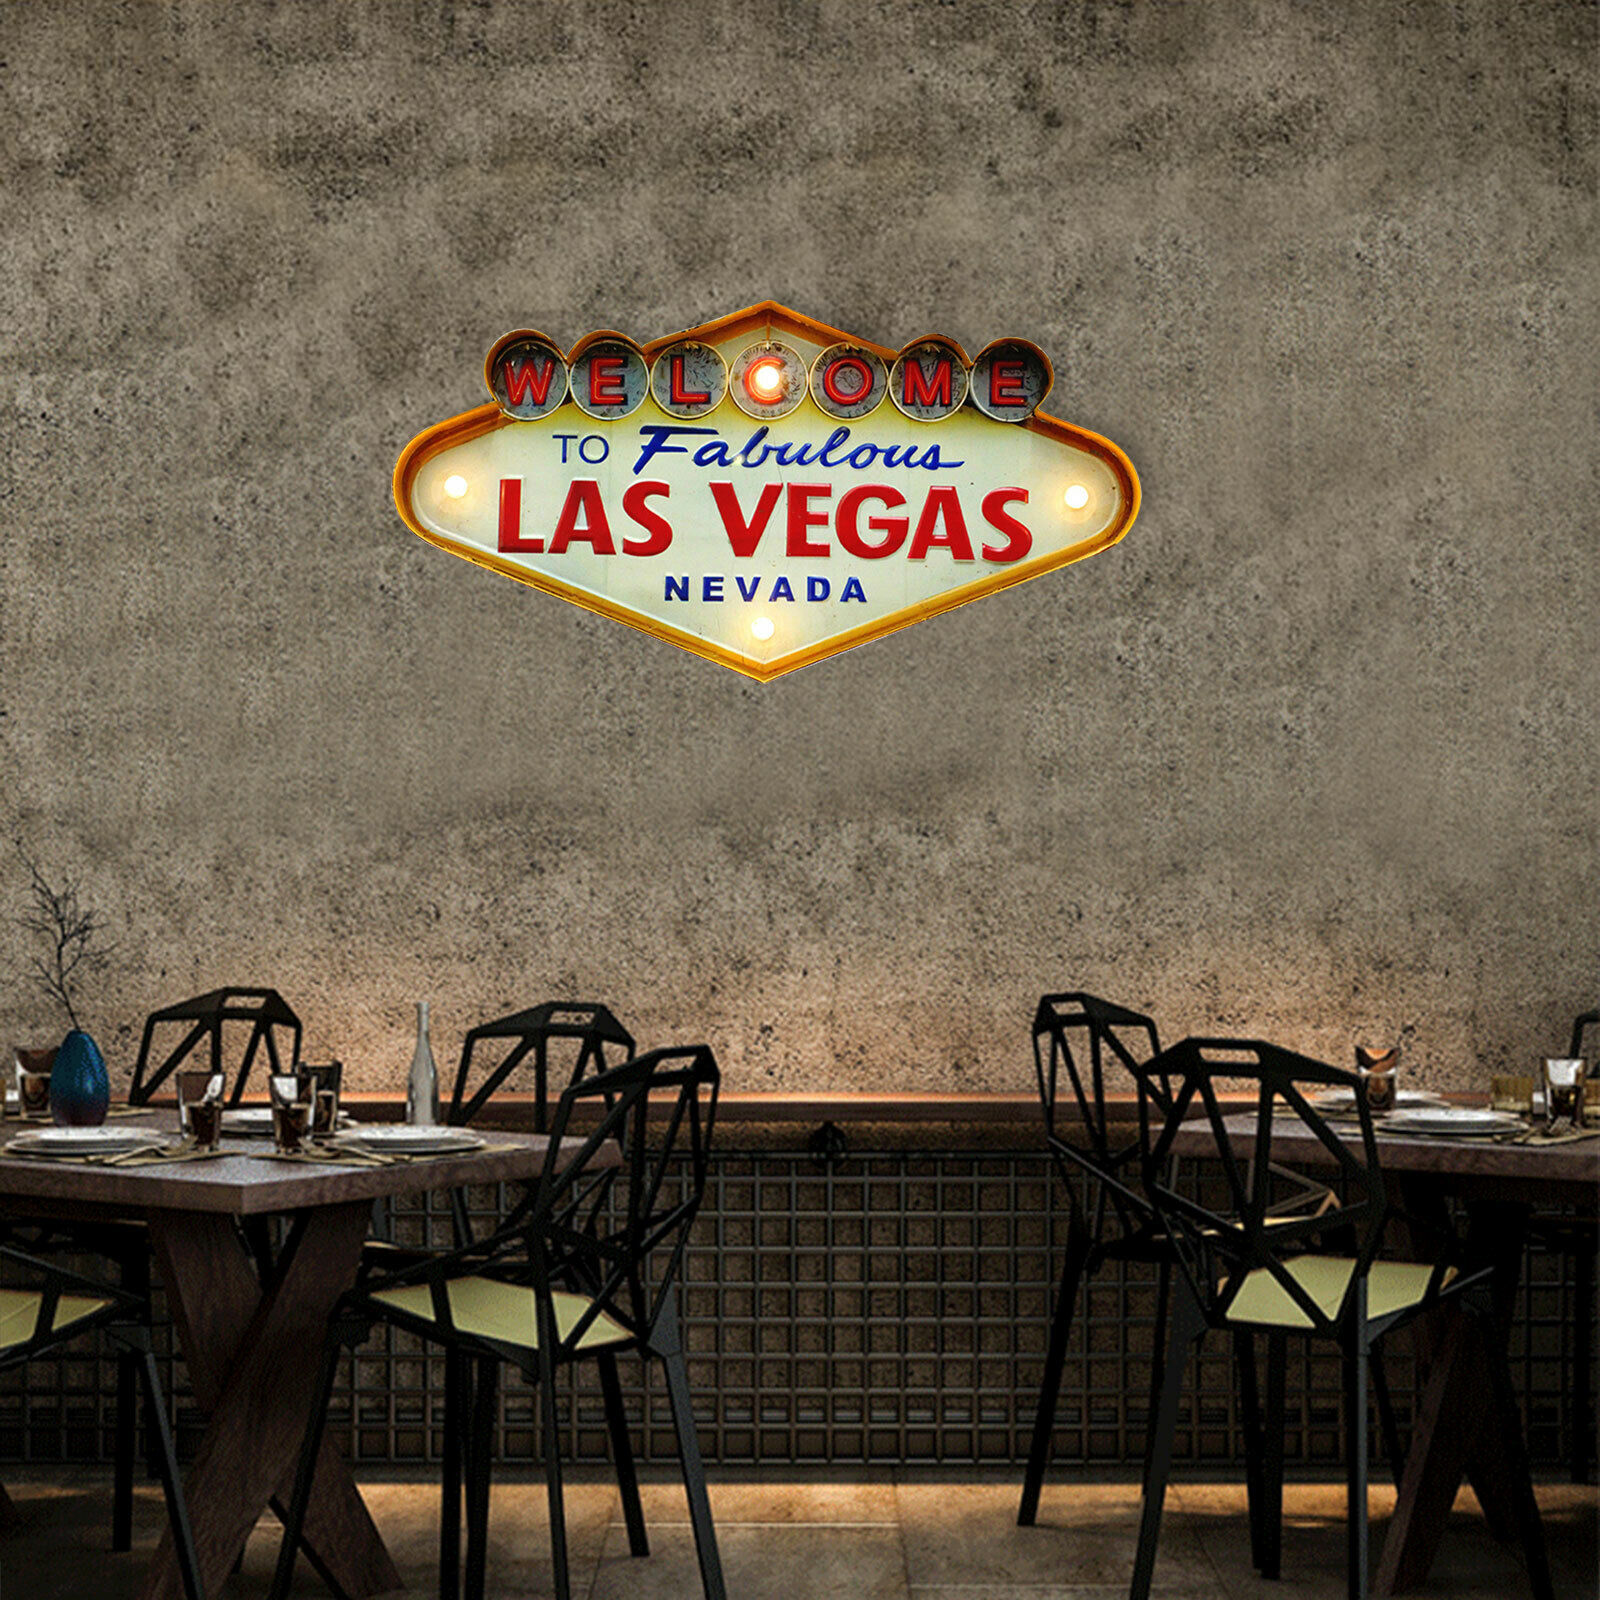 Retro Welcome to Fabulous Las Vegas Nevada Metal Bar Neon Light Sign Wall Decor